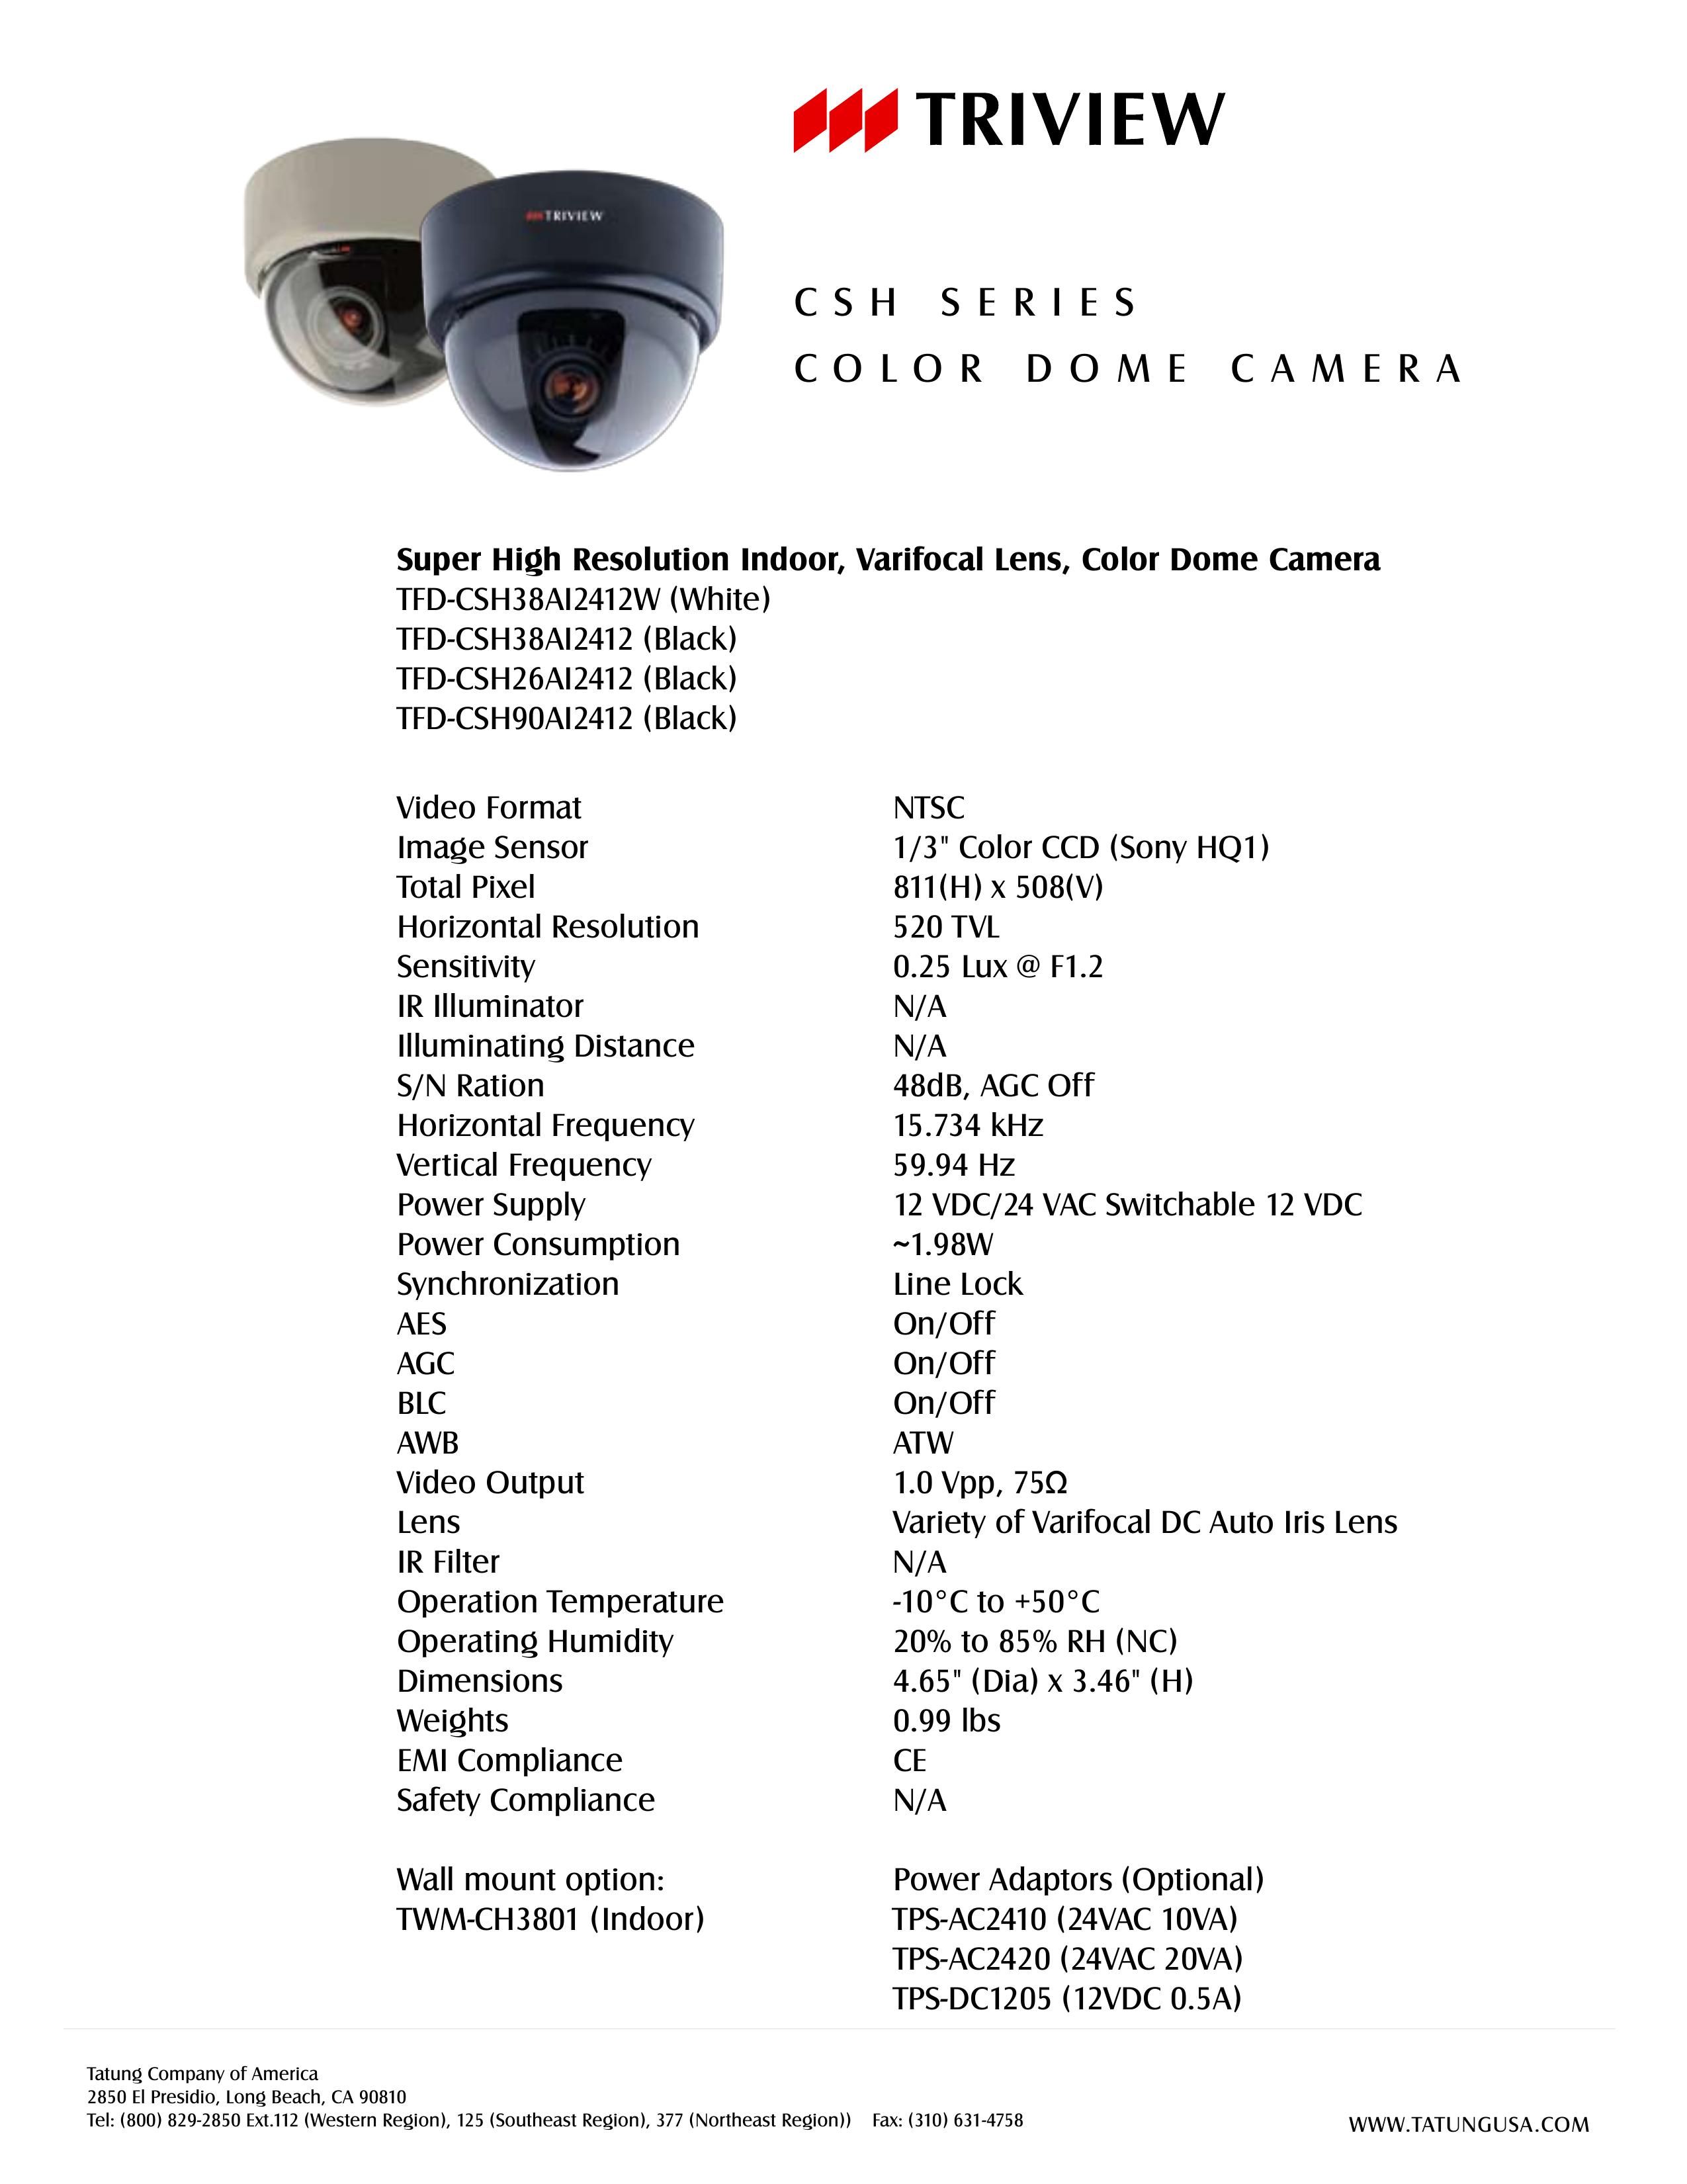 Tatung TFD-CSH38AI2412 Security Camera User Manual